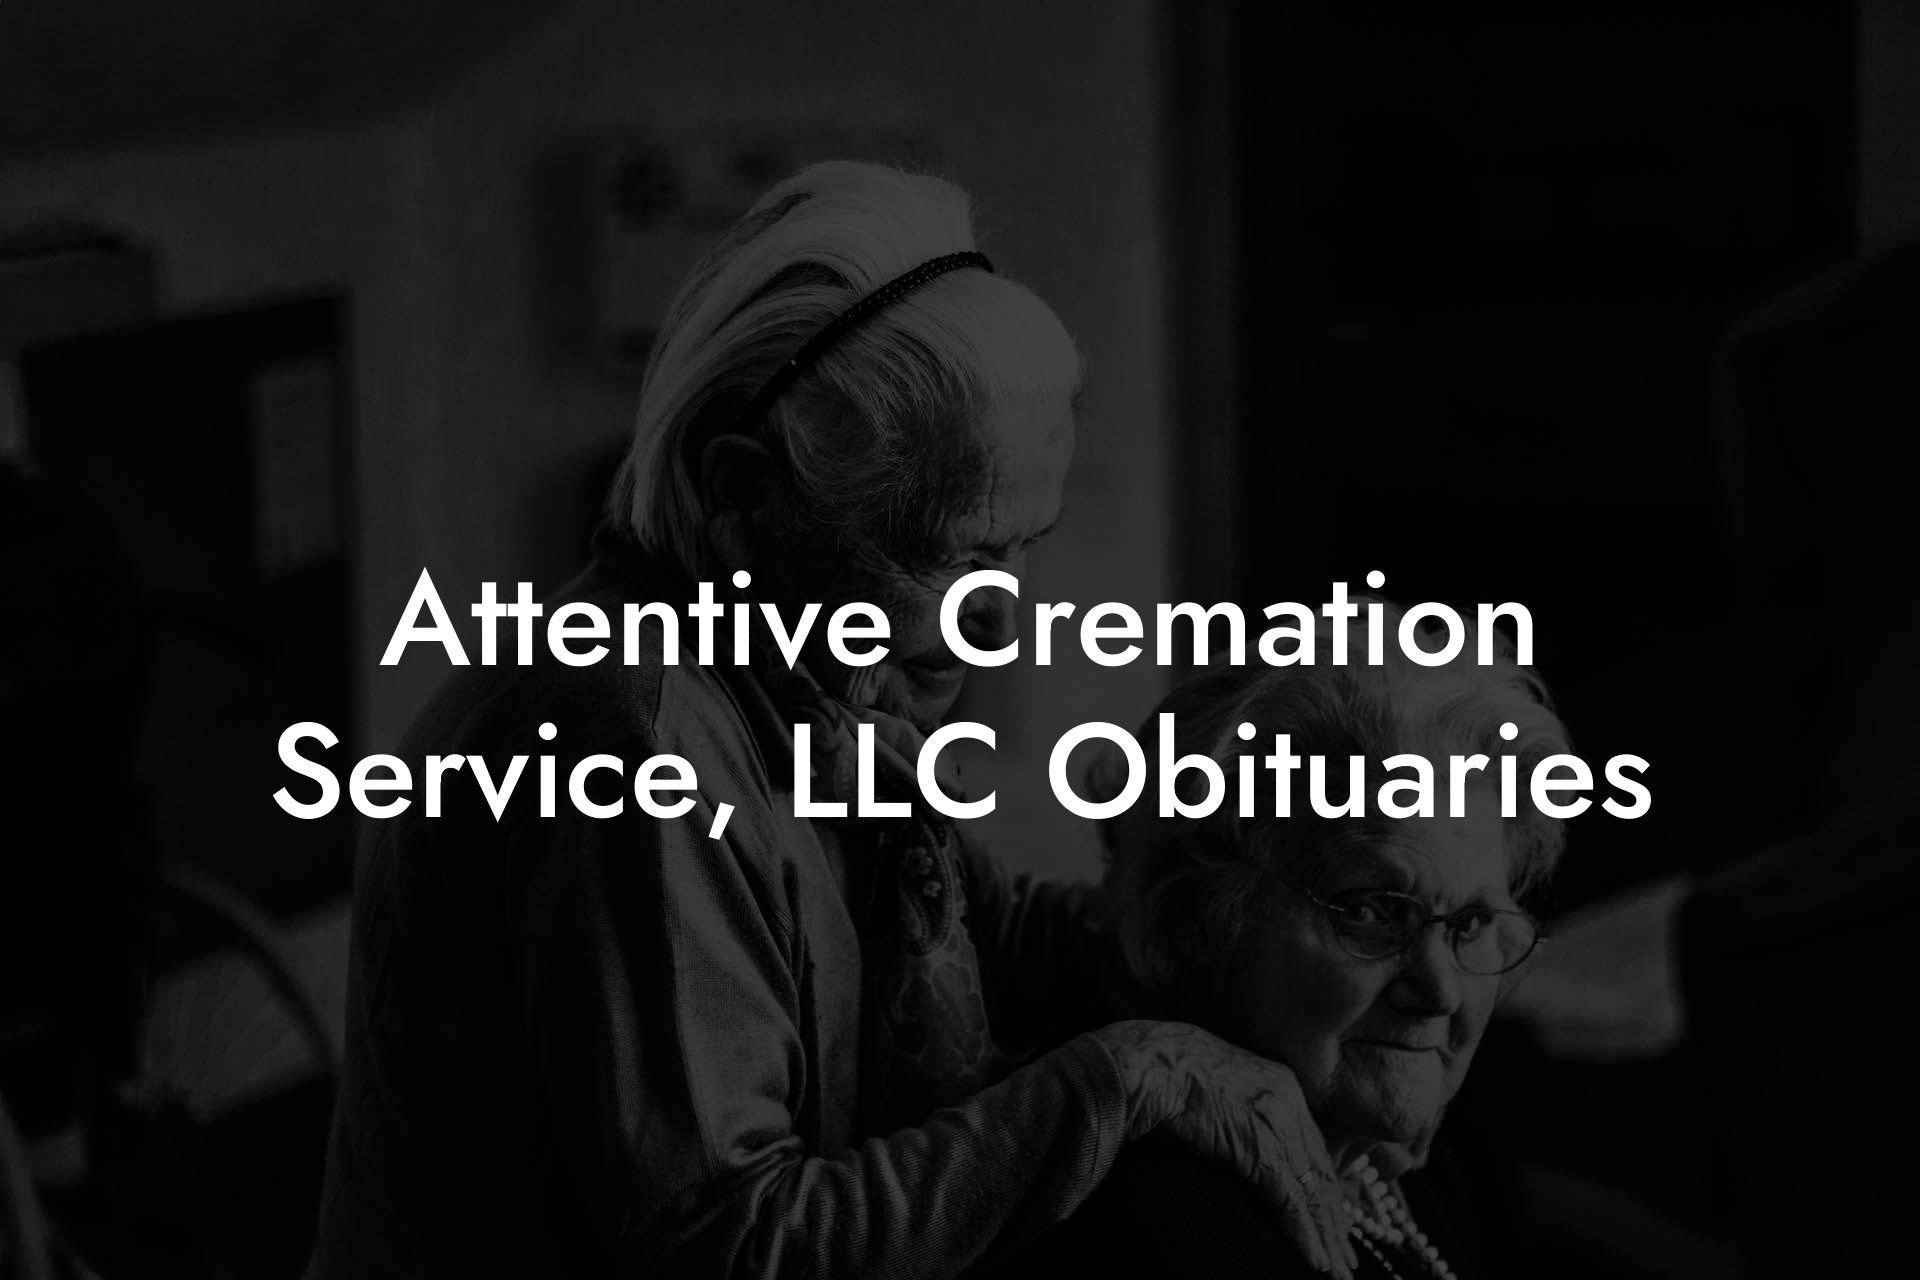 Attentive Cremation Service, LLC Obituaries